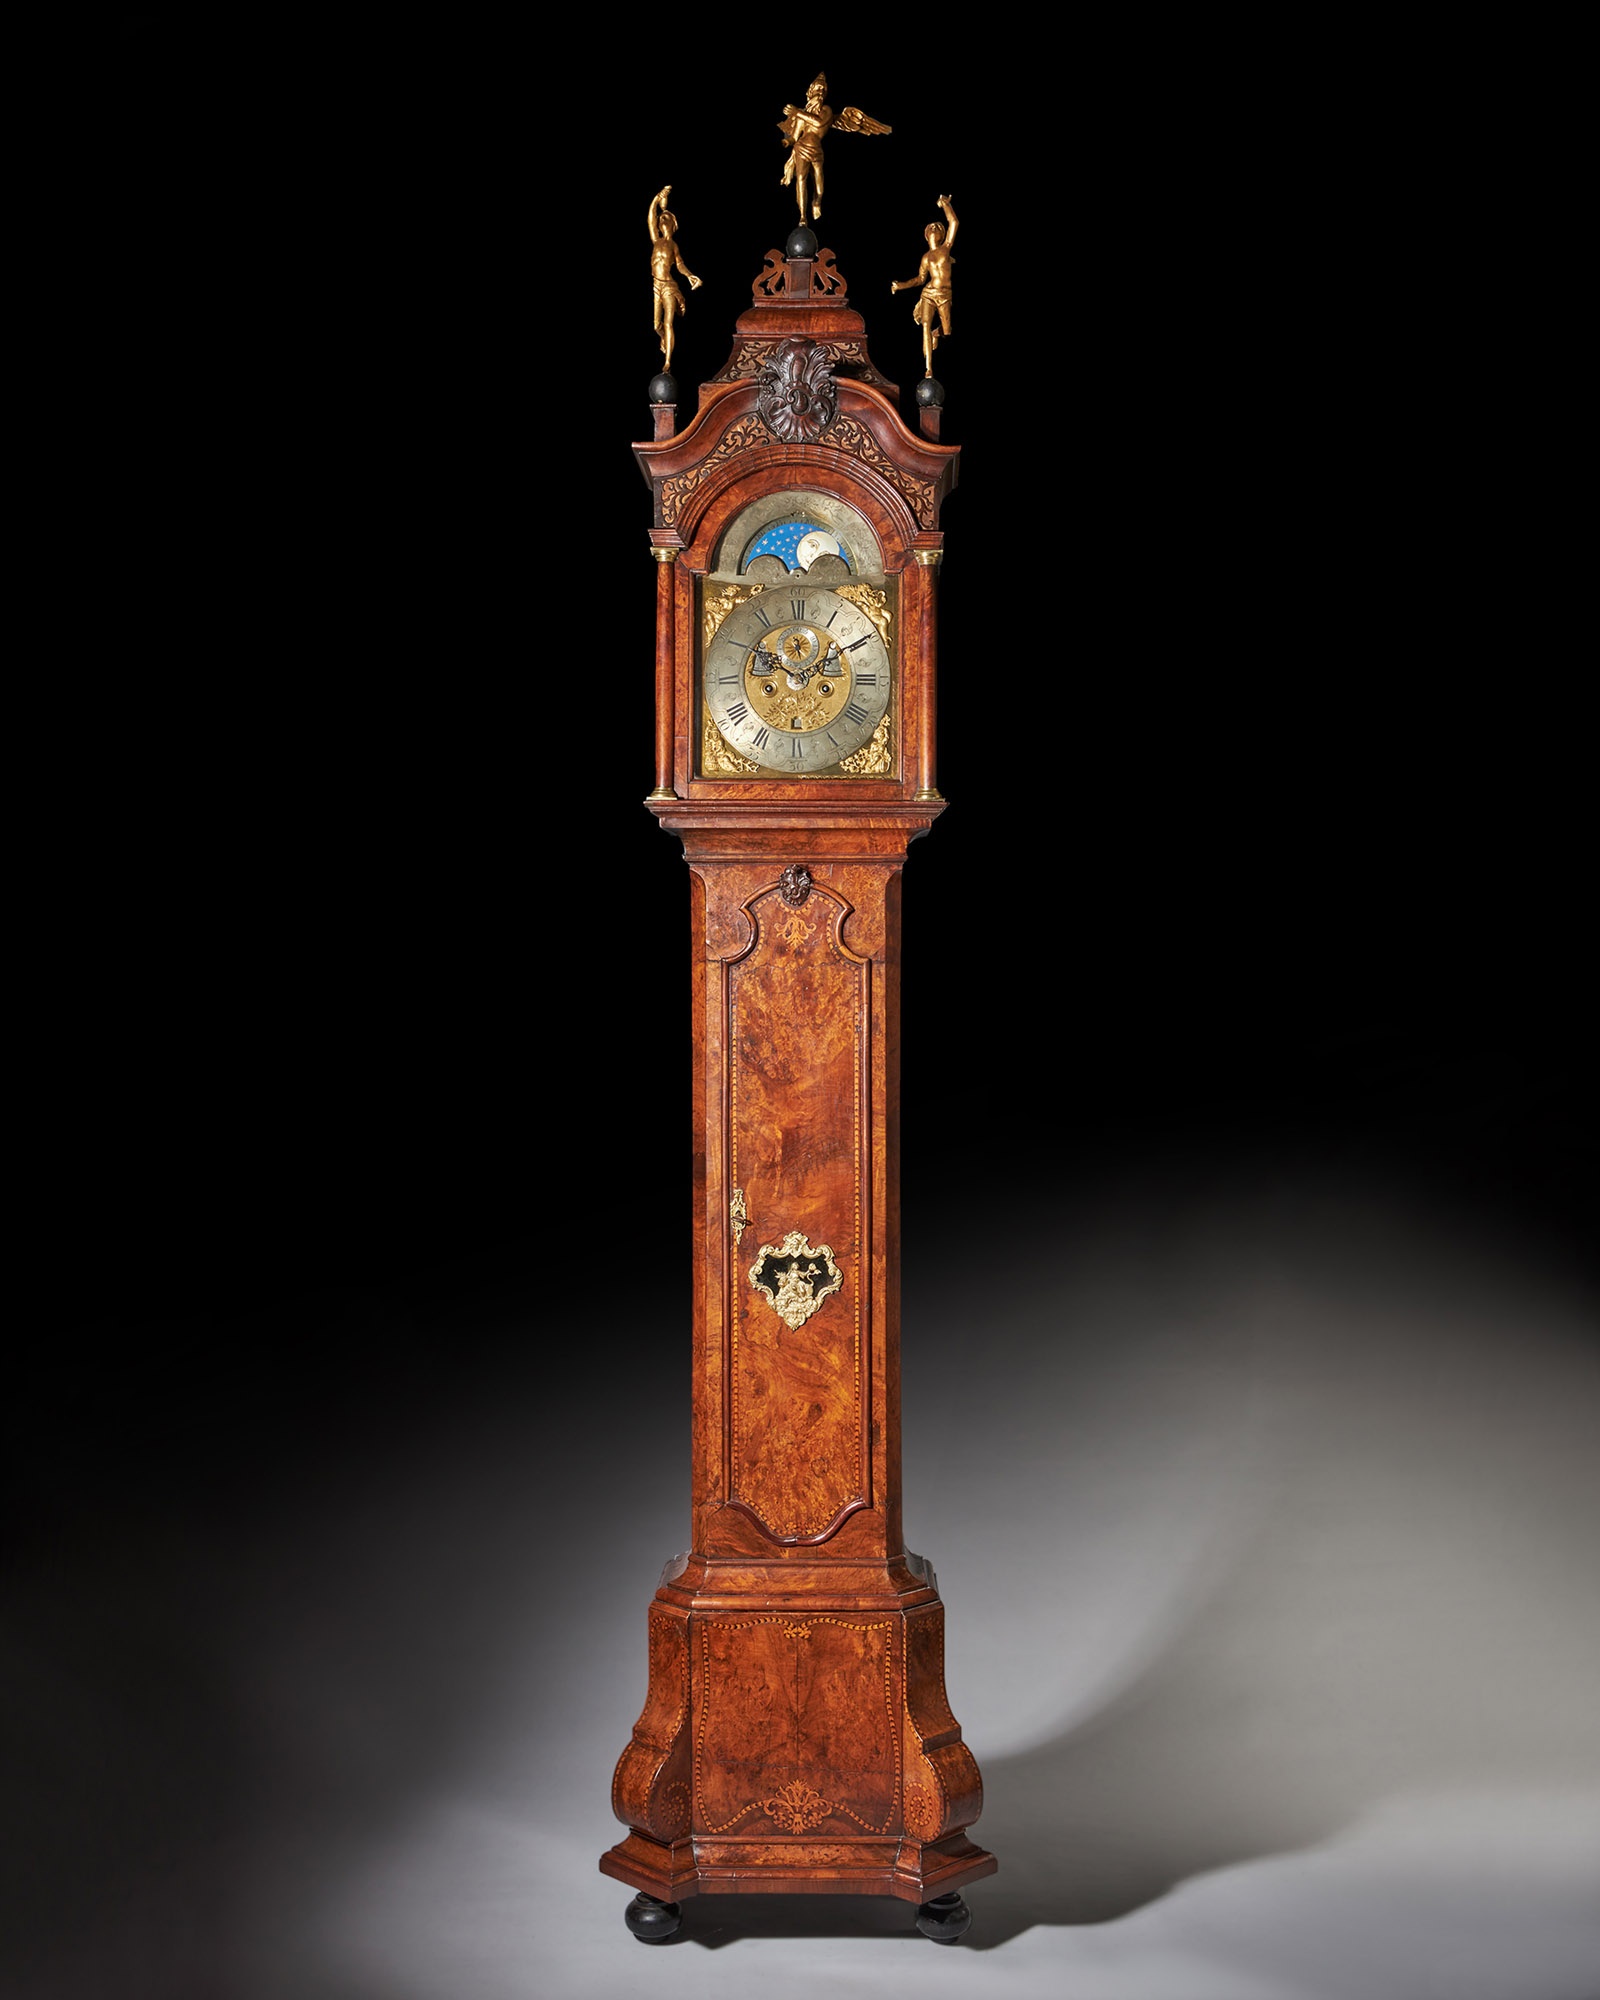 Magnificent 18th Century Striking Dutch Amsterdam Burl Walnut Longcase Clock